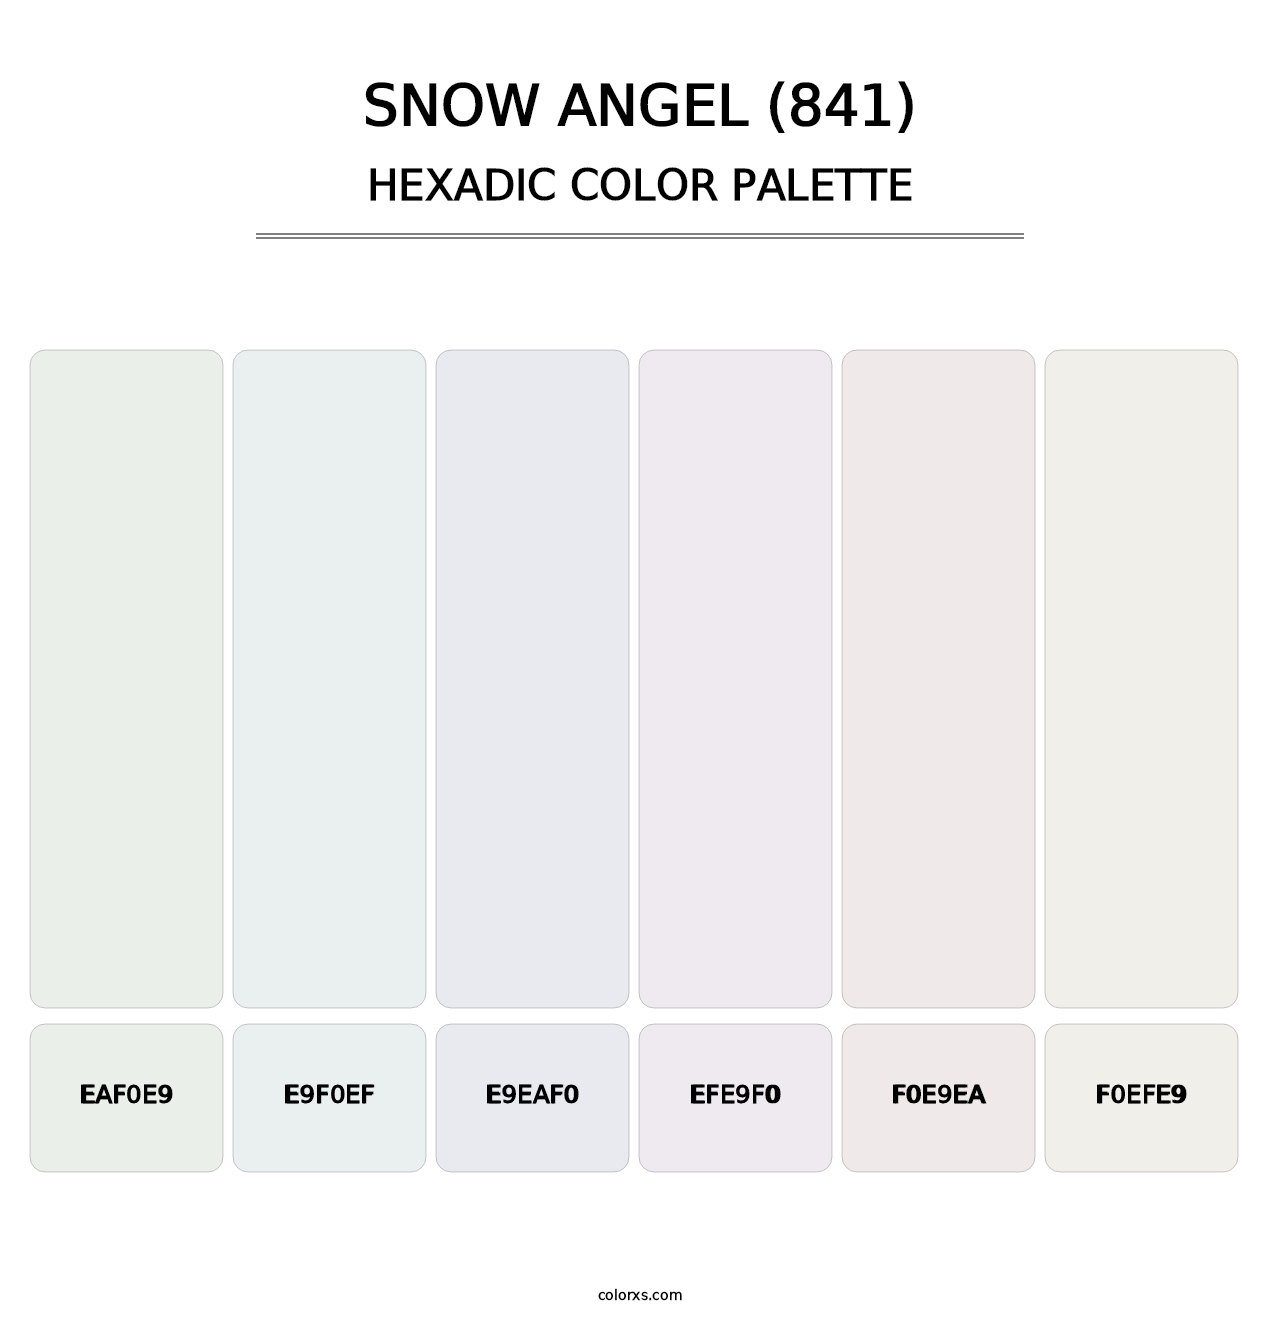 Snow Angel (841) - Hexadic Color Palette